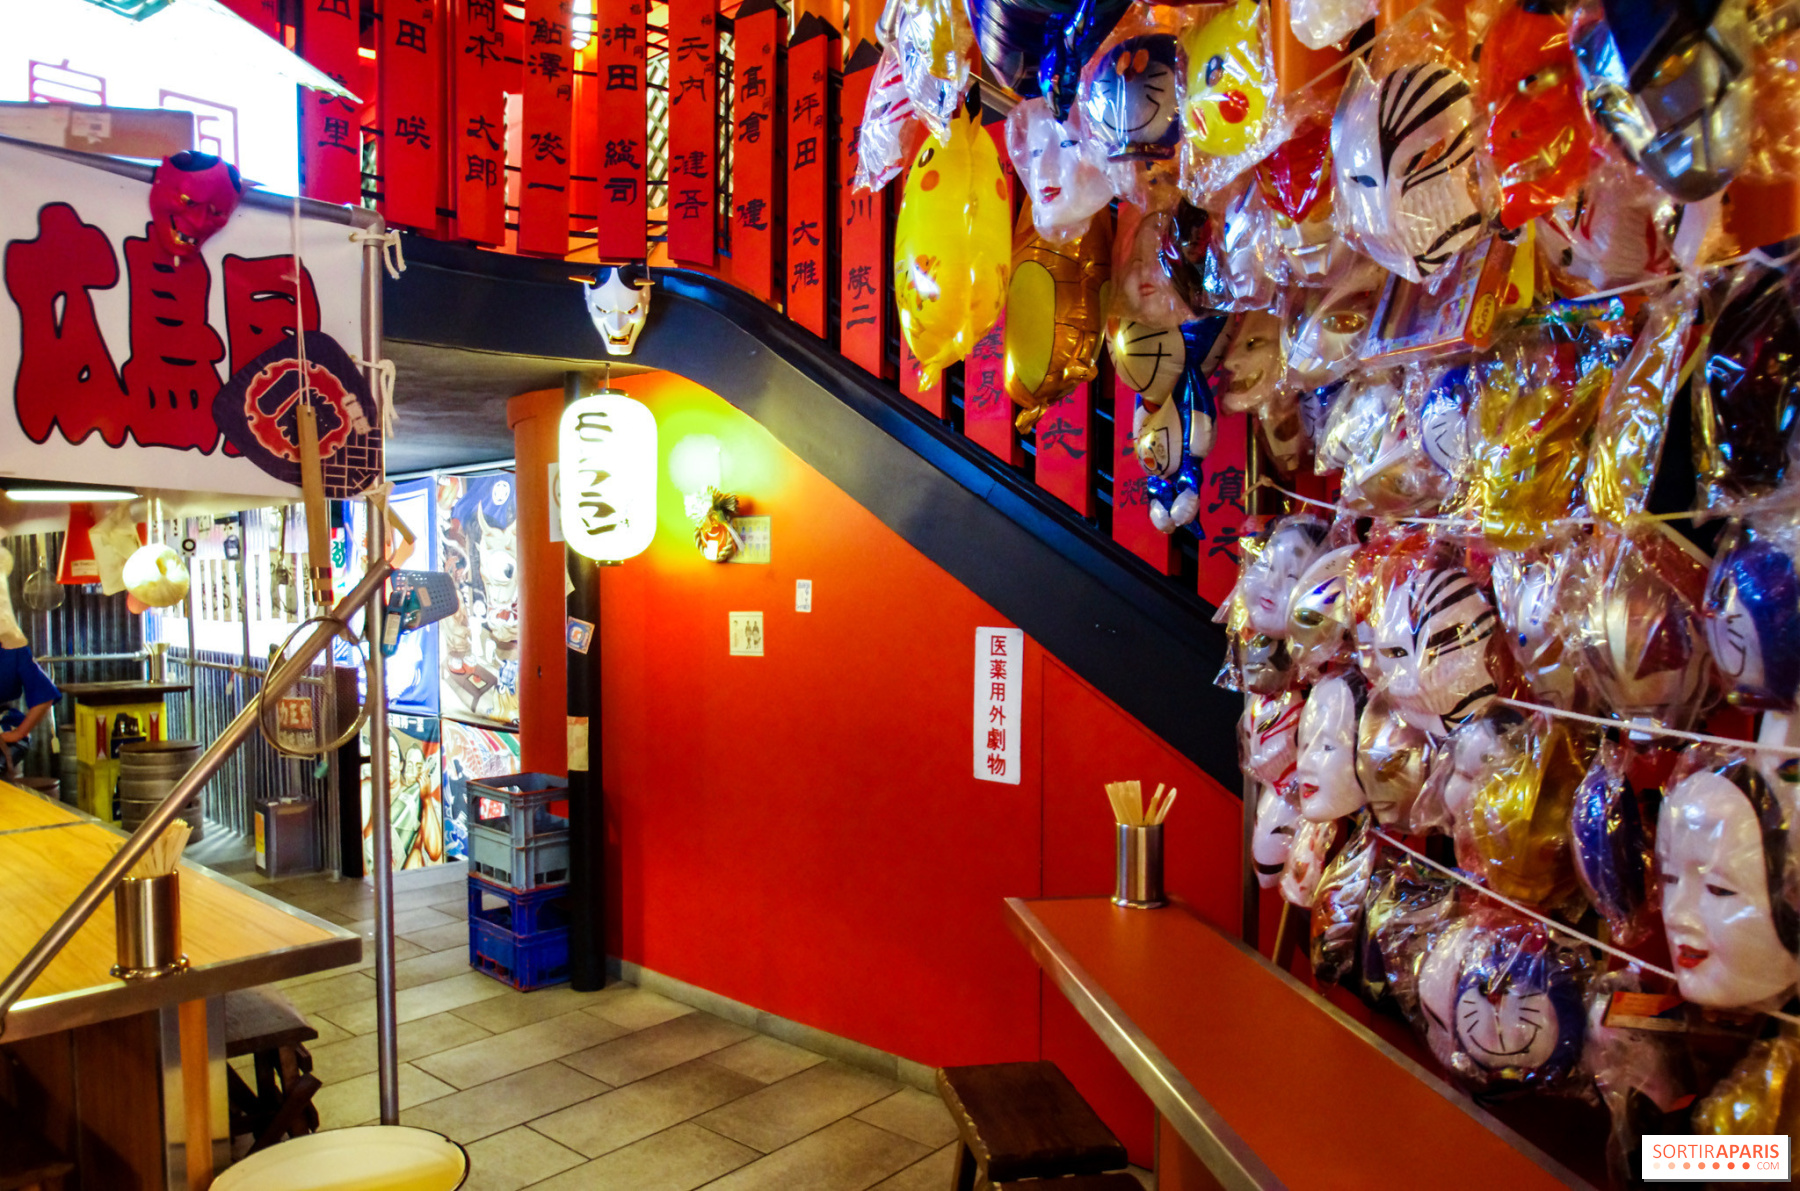 Isshin: Japanese ramen restaurant in Paris with immersive - Sortiraparis.com